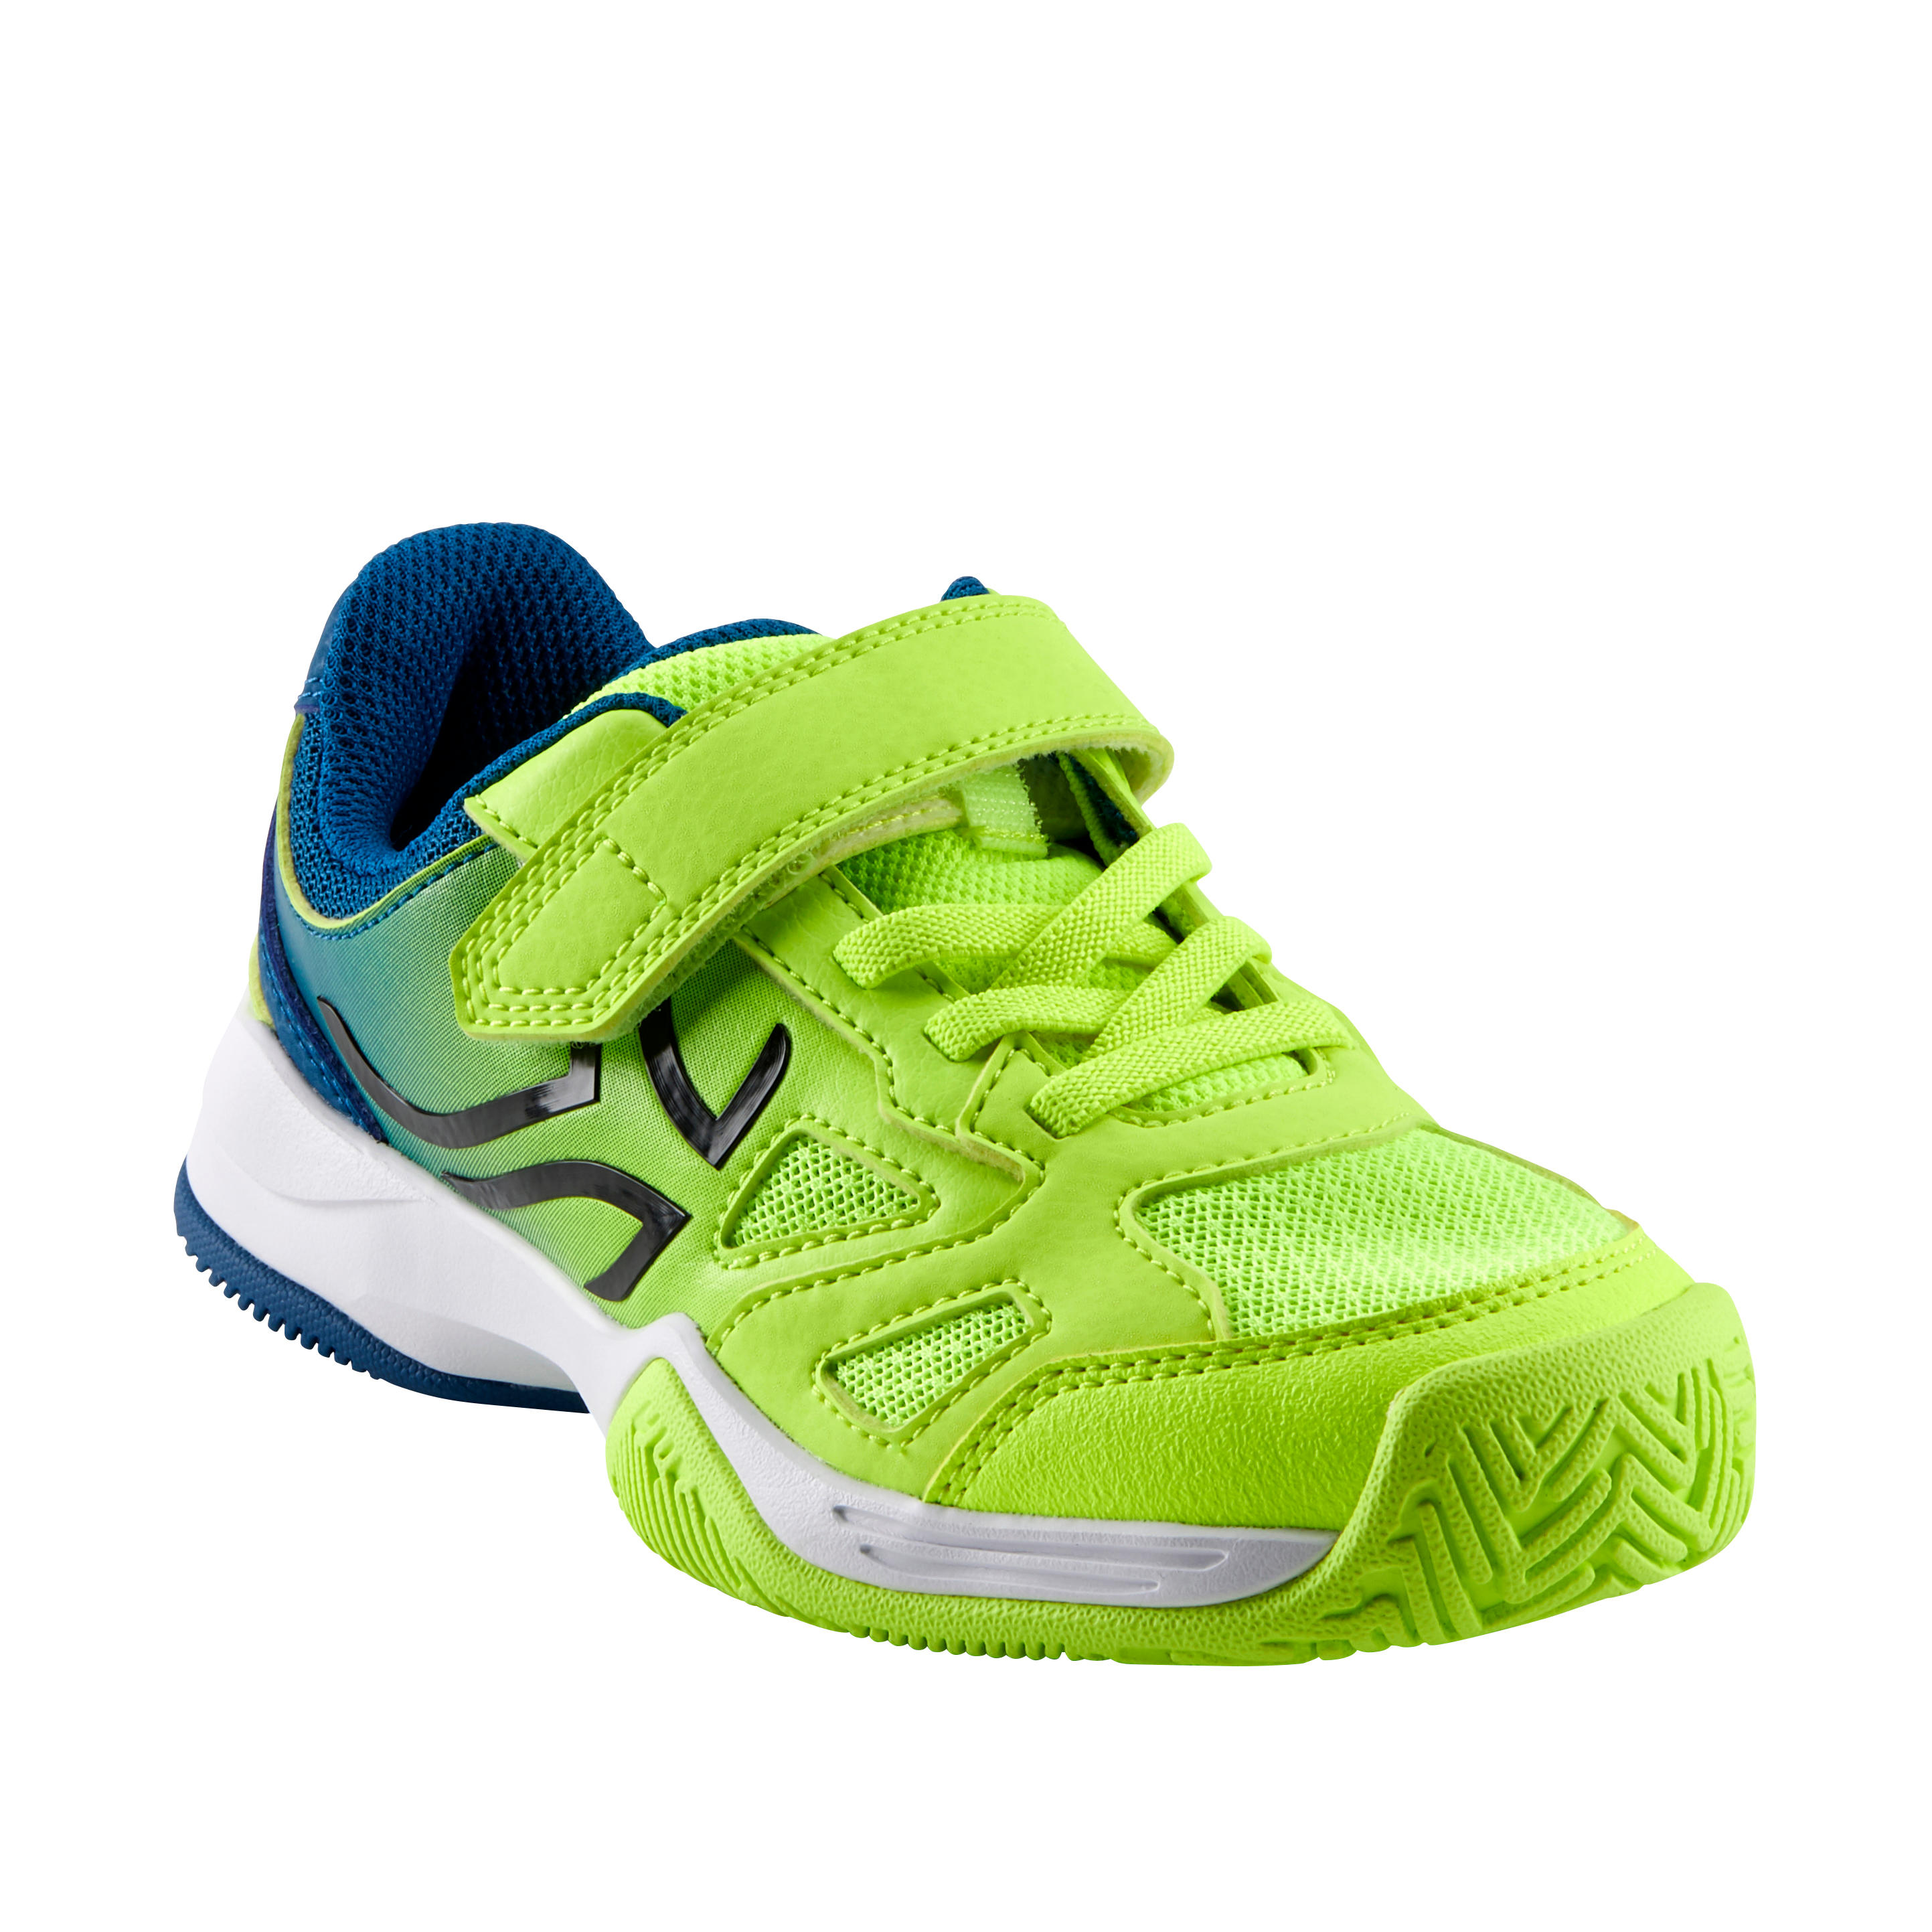 ARTENGO TS560 KD Kids' Tennis Shoes - Blue/Yellow